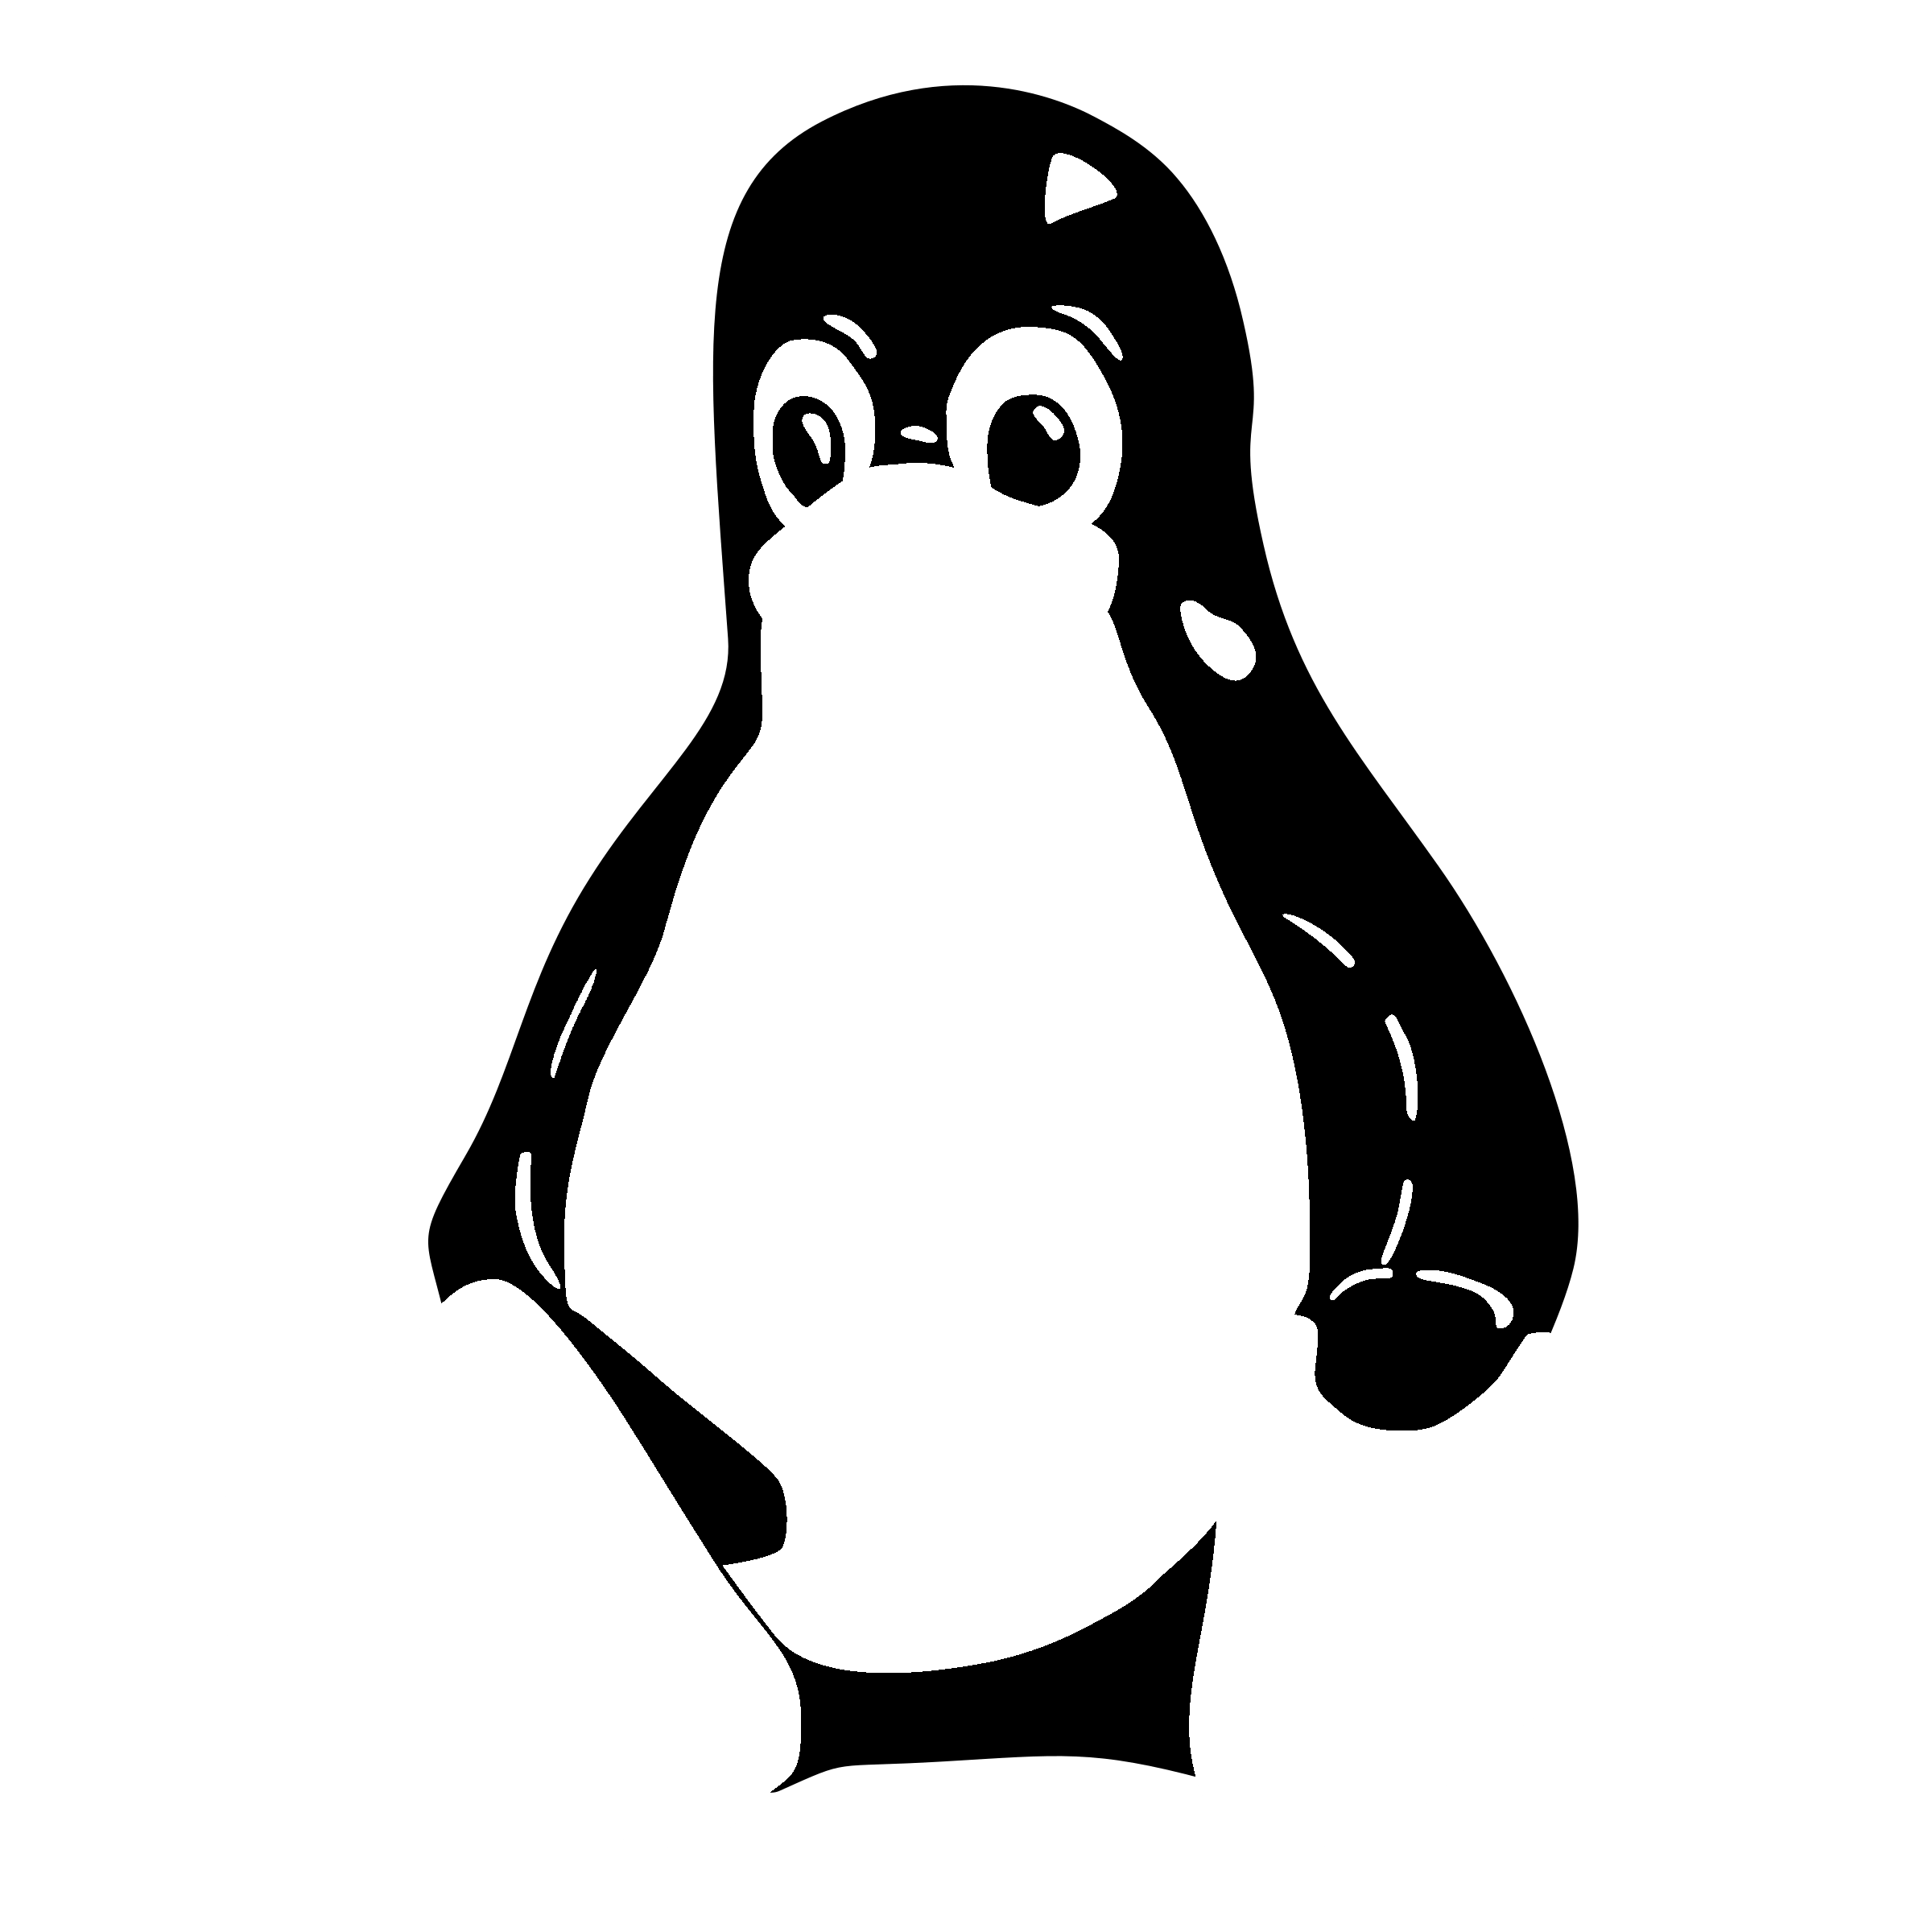 Linux Logo - Linux Tux Logo PNG Transparent & SVG Vector - Freebie Supply